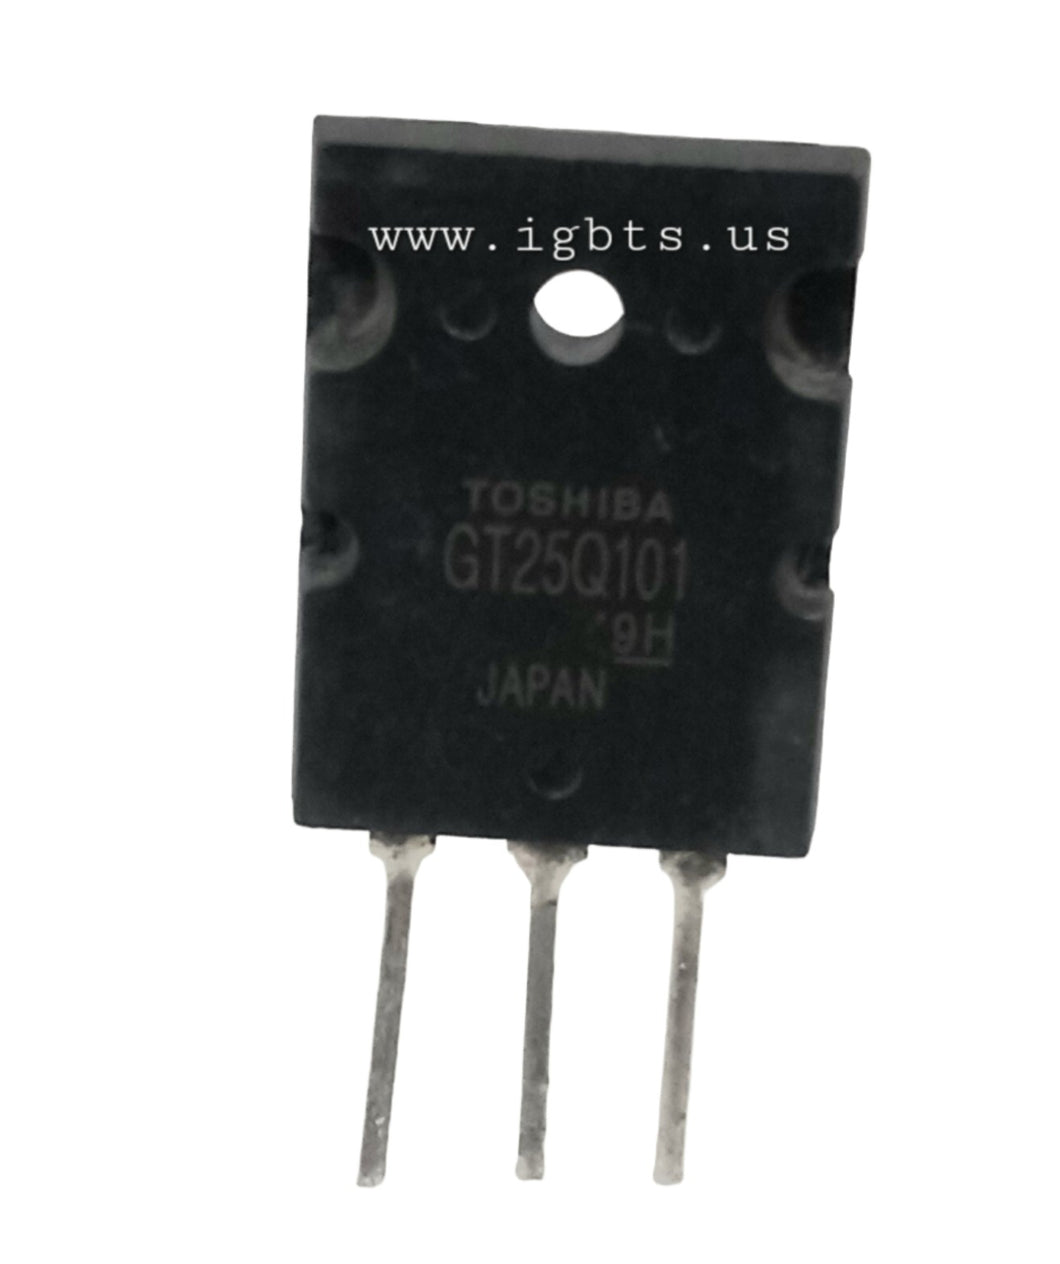 GT25Q101-TOSHIBA